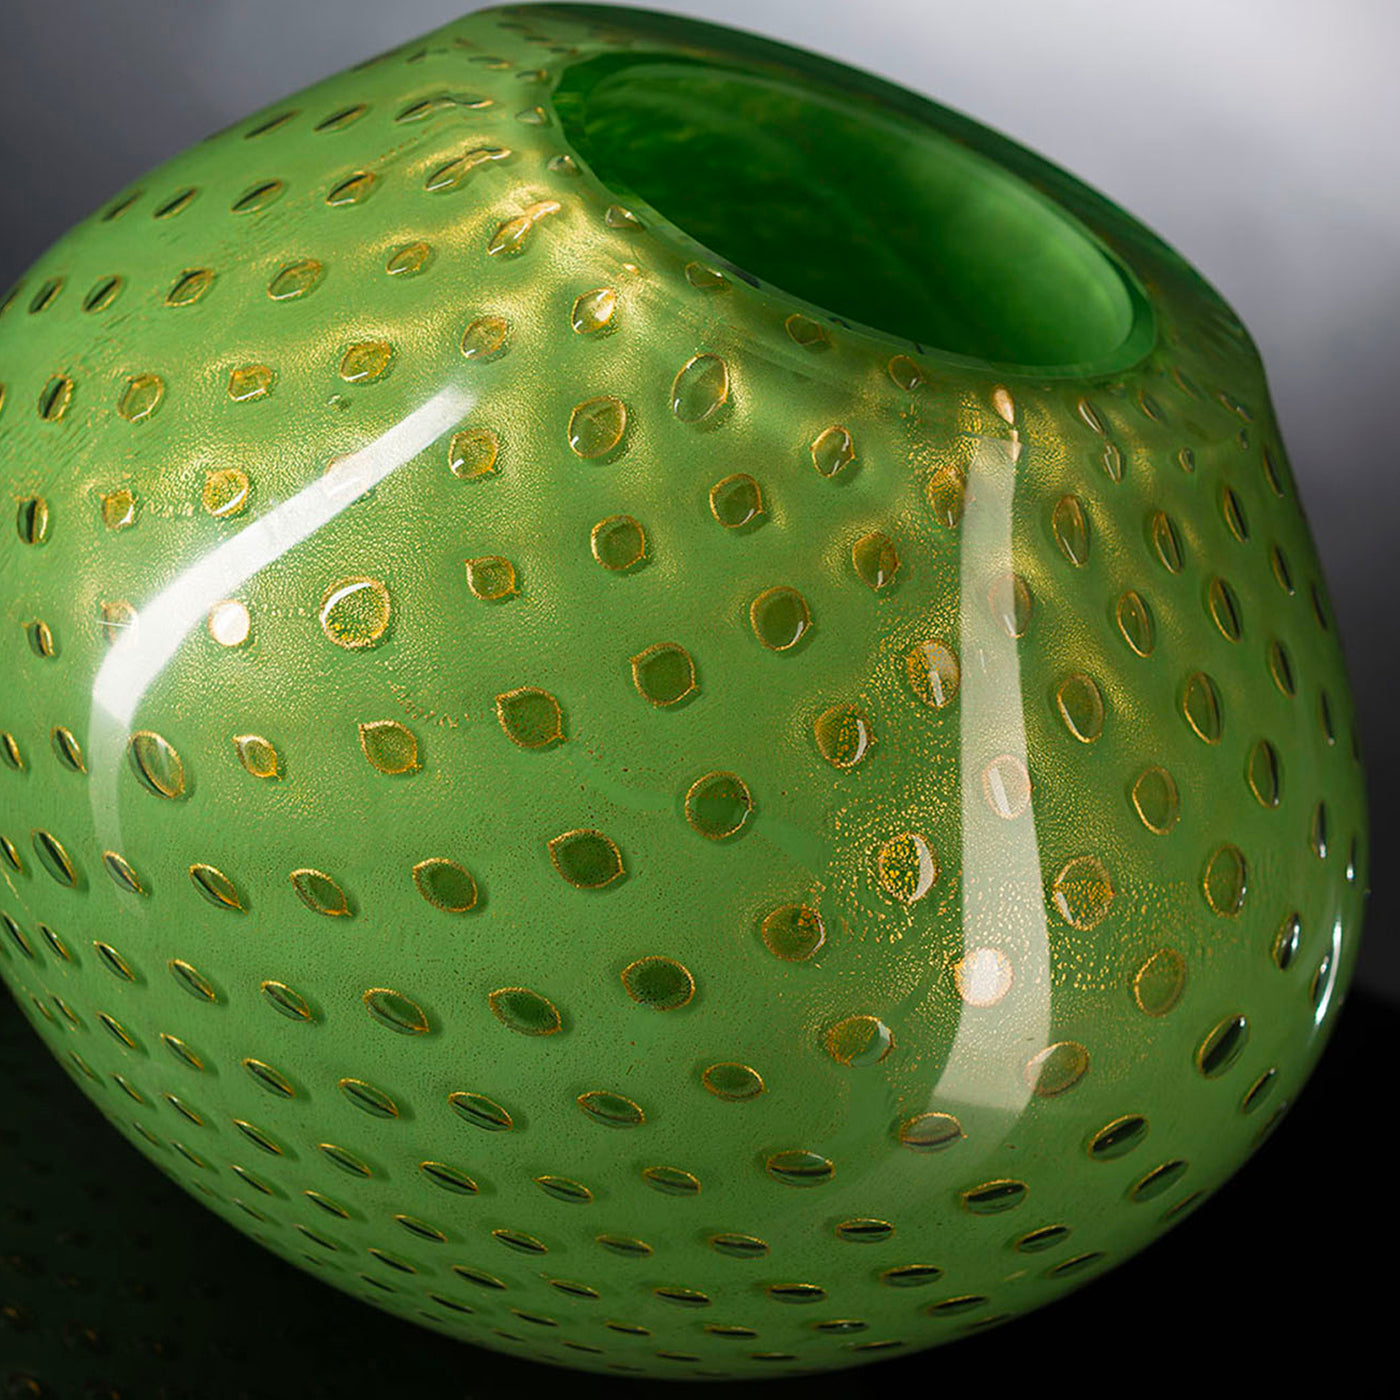 Mocenigo Sfera Gold & Green Vase - Alternative view 1